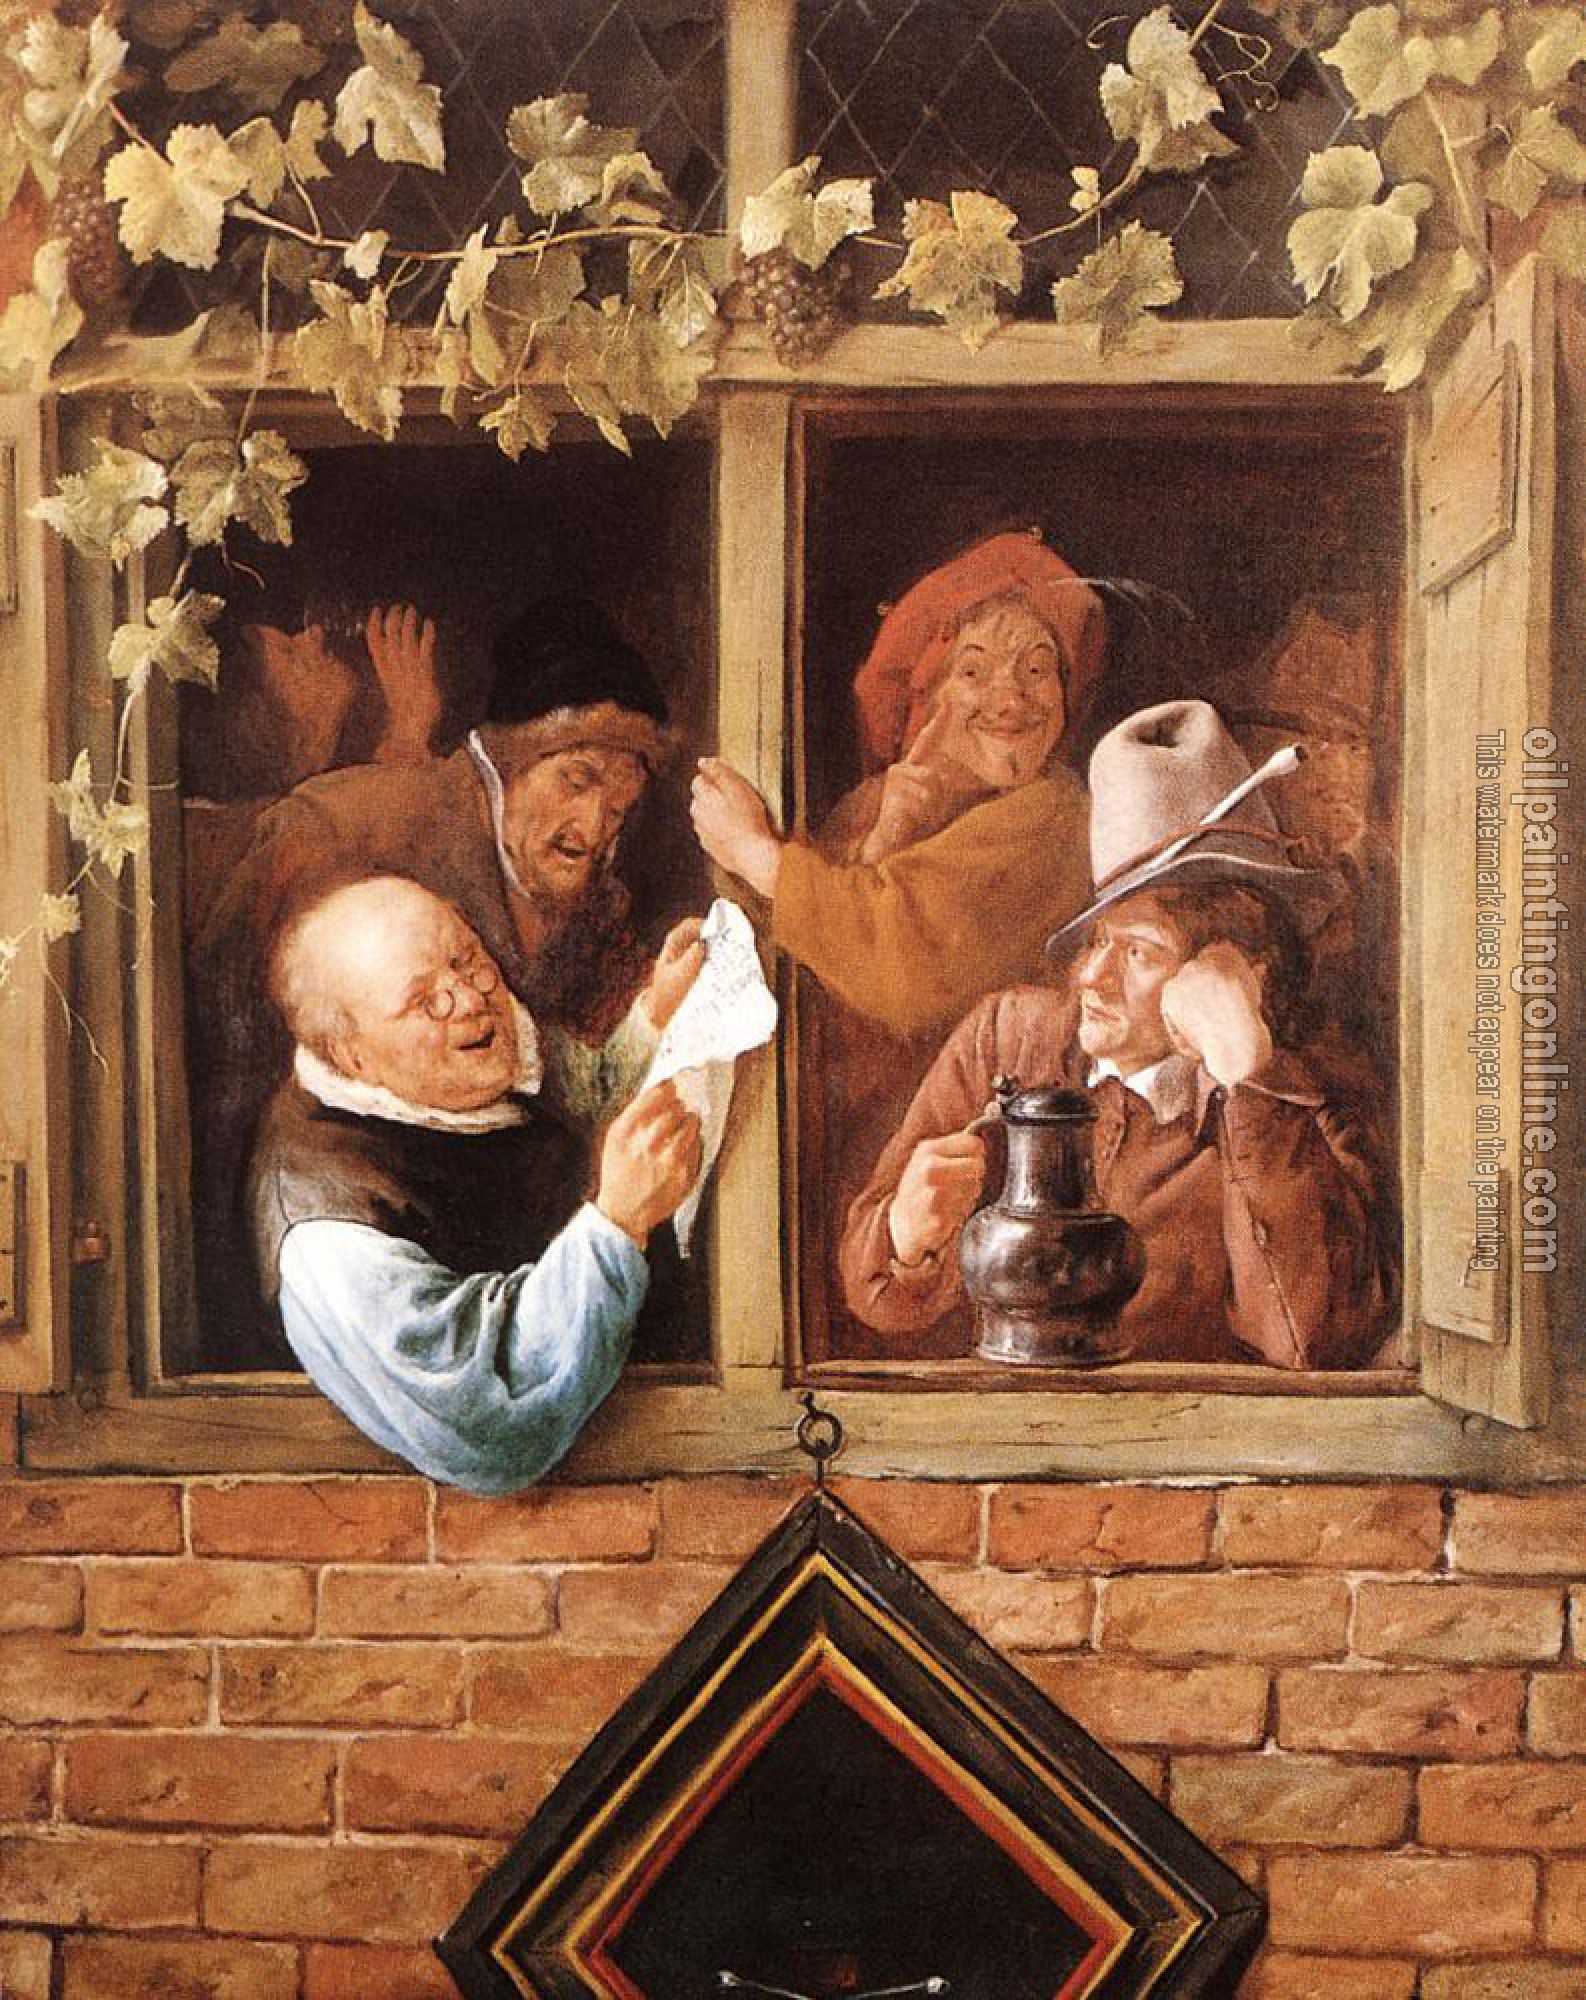 Steen, Jan - Rhetoricians at a Window